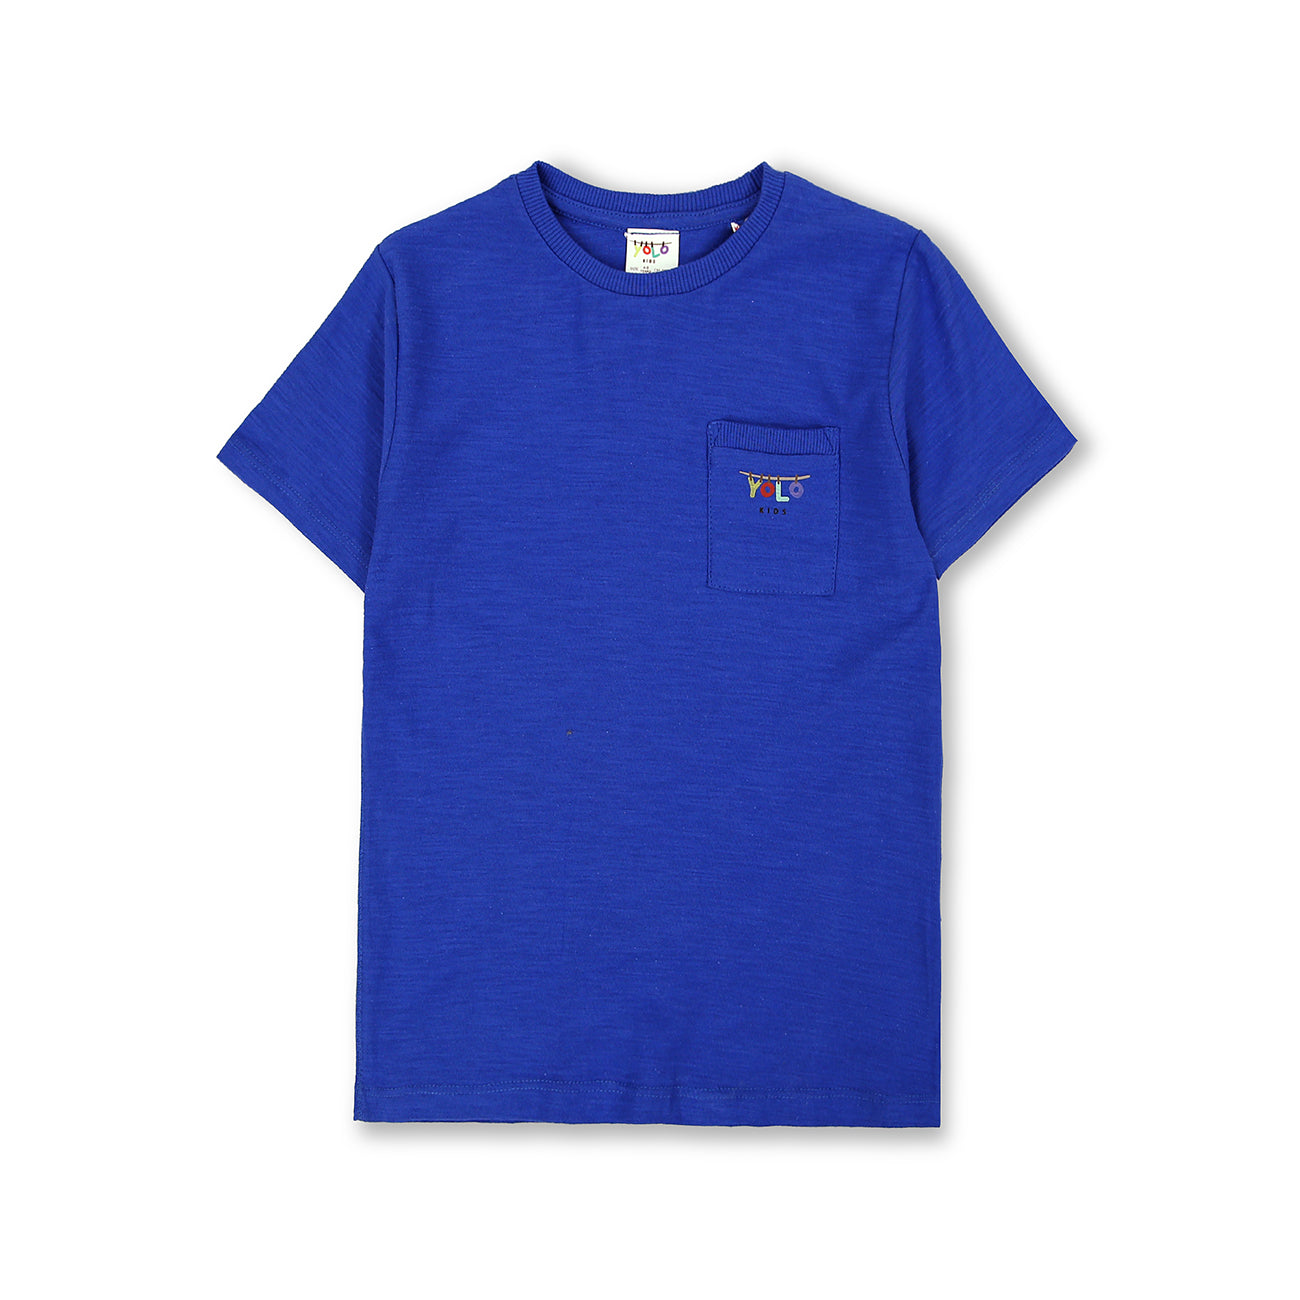 Premium Quality Blue Slub Jersy Soft Cotton T-Shirt For Kids (11176)